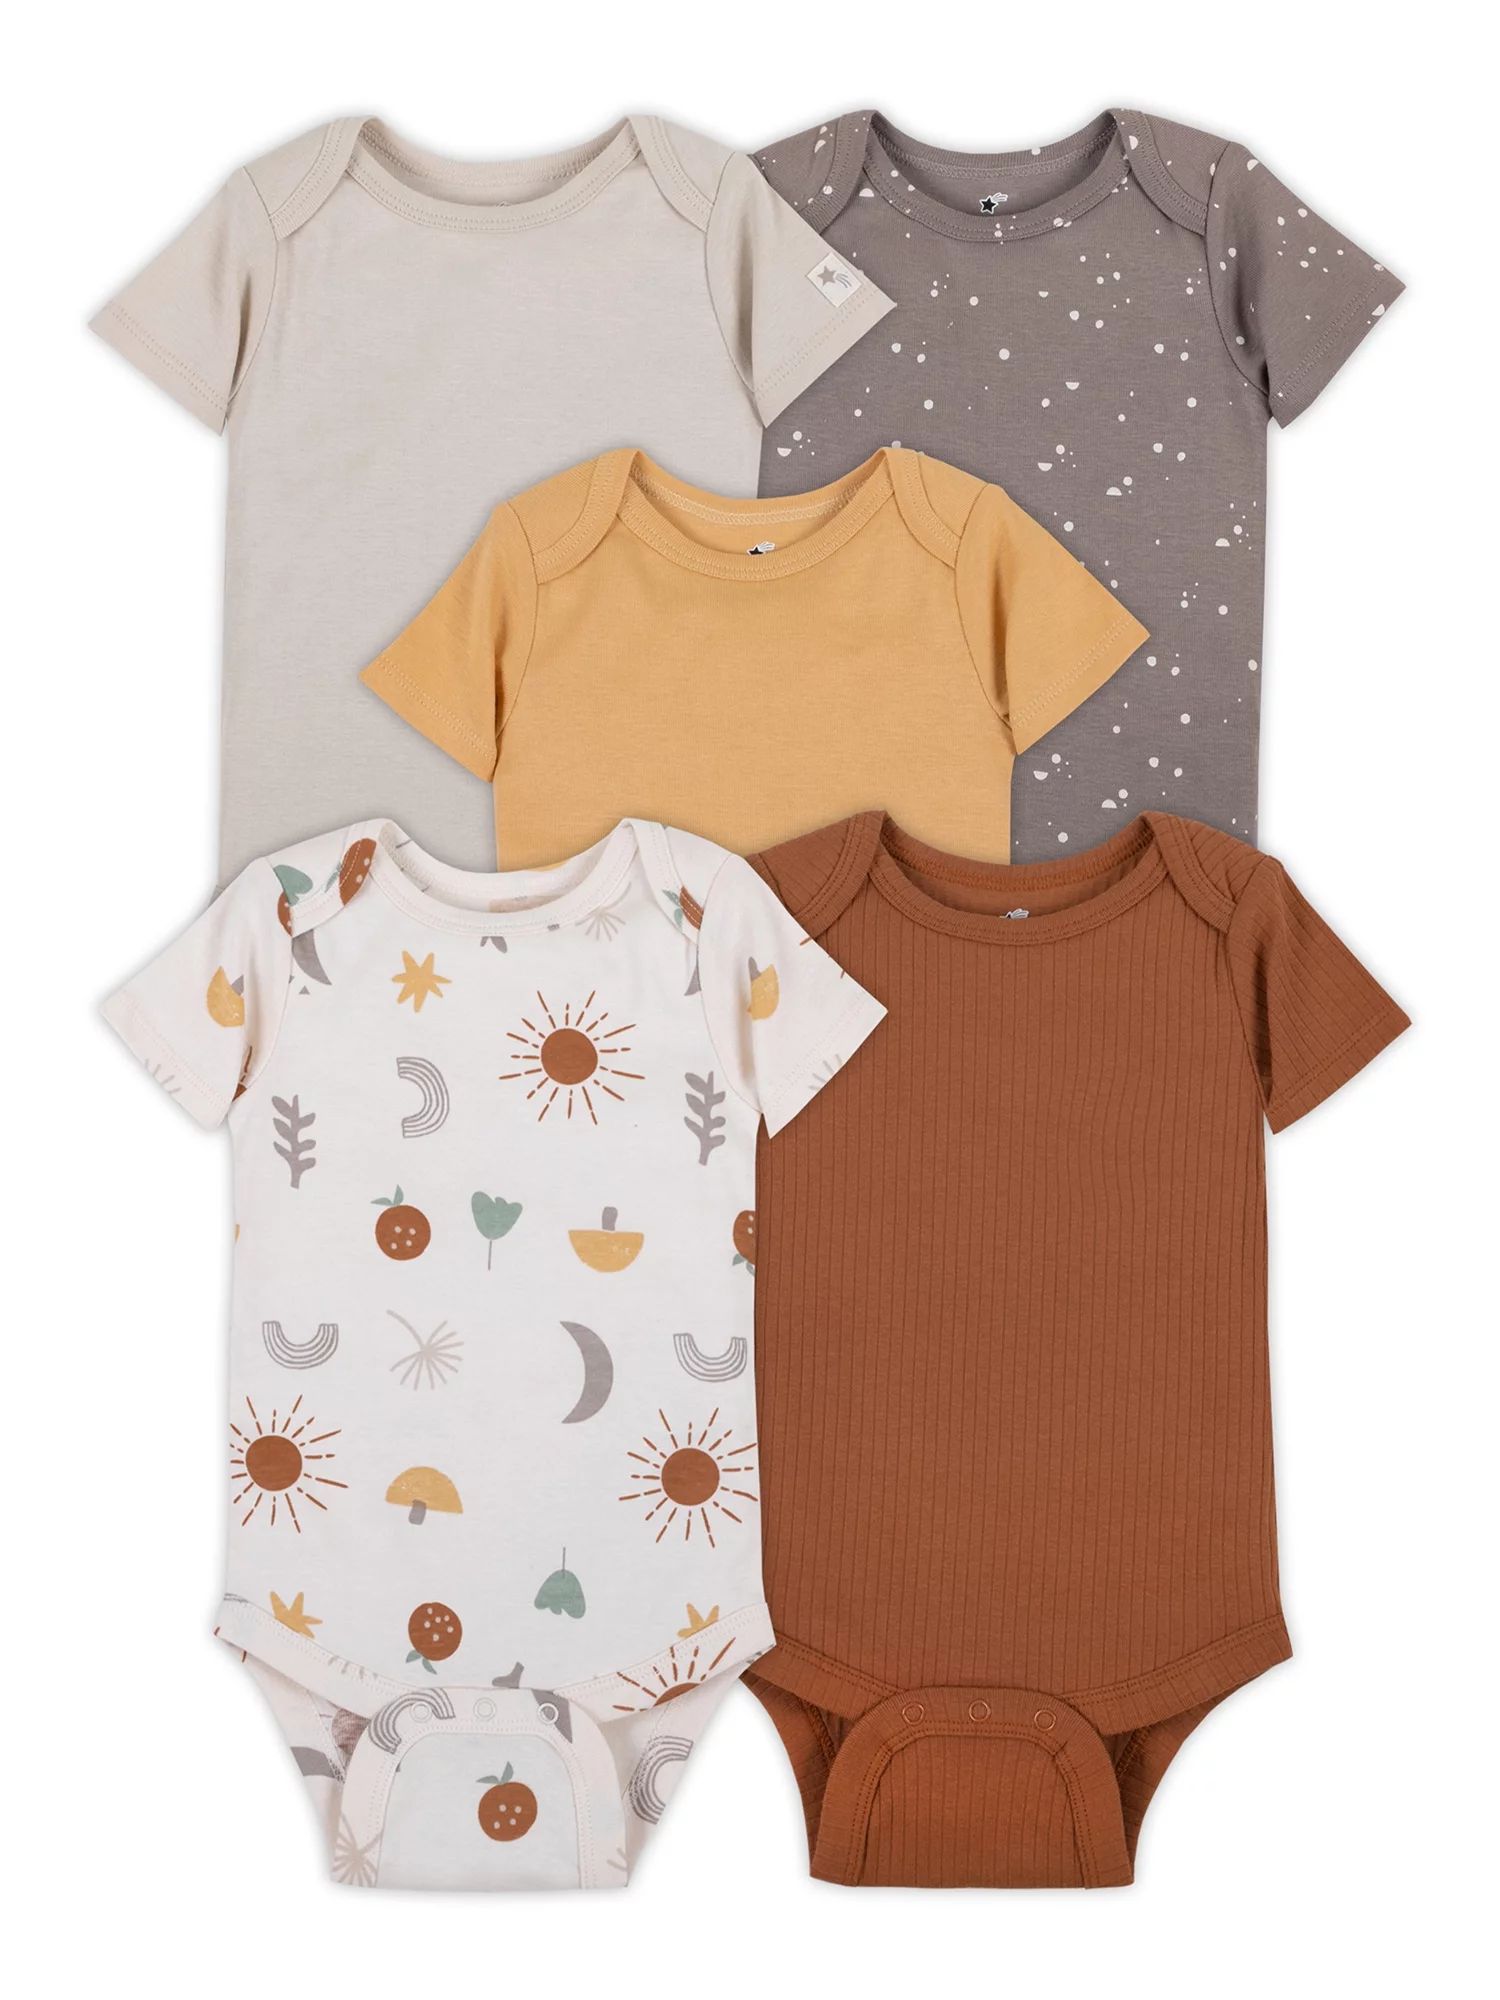 Little Star Organic Baby Unisex 5Pk Short Sleeve Bodysuits, Size Newborn-24M | Walmart (US)